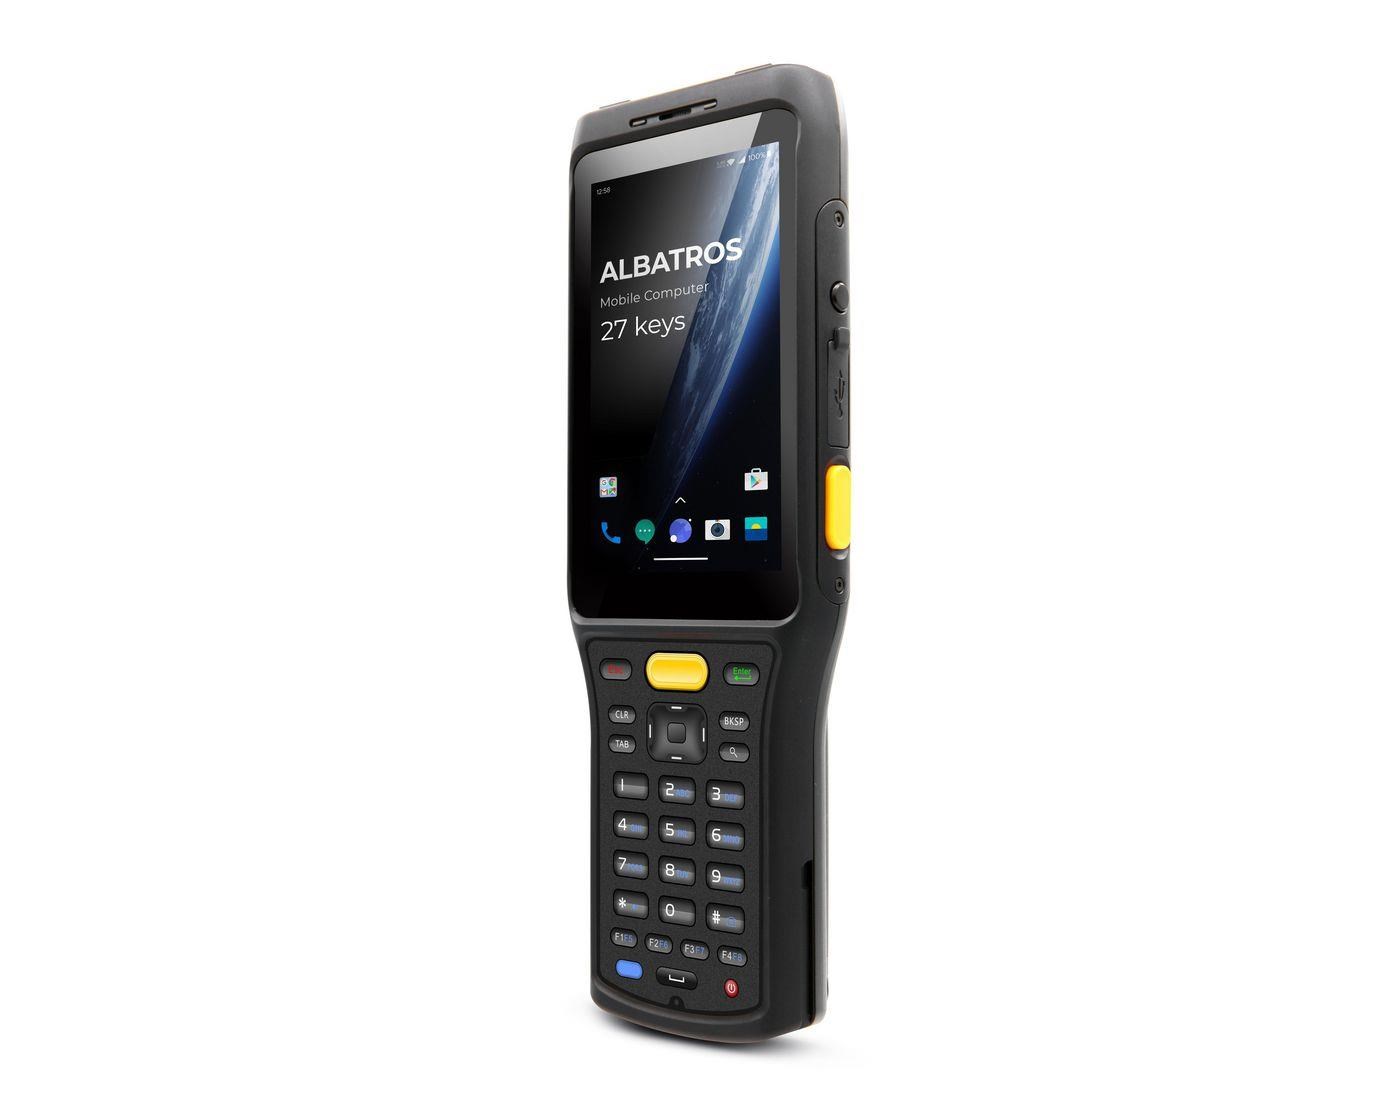 Capture Albatross Mobile Terminal 27 keys +2D scanner(Zebra SE4850)+NFC+4G+WIFI+BT+GPS+WiFi+Bluetooth+Camera)0 